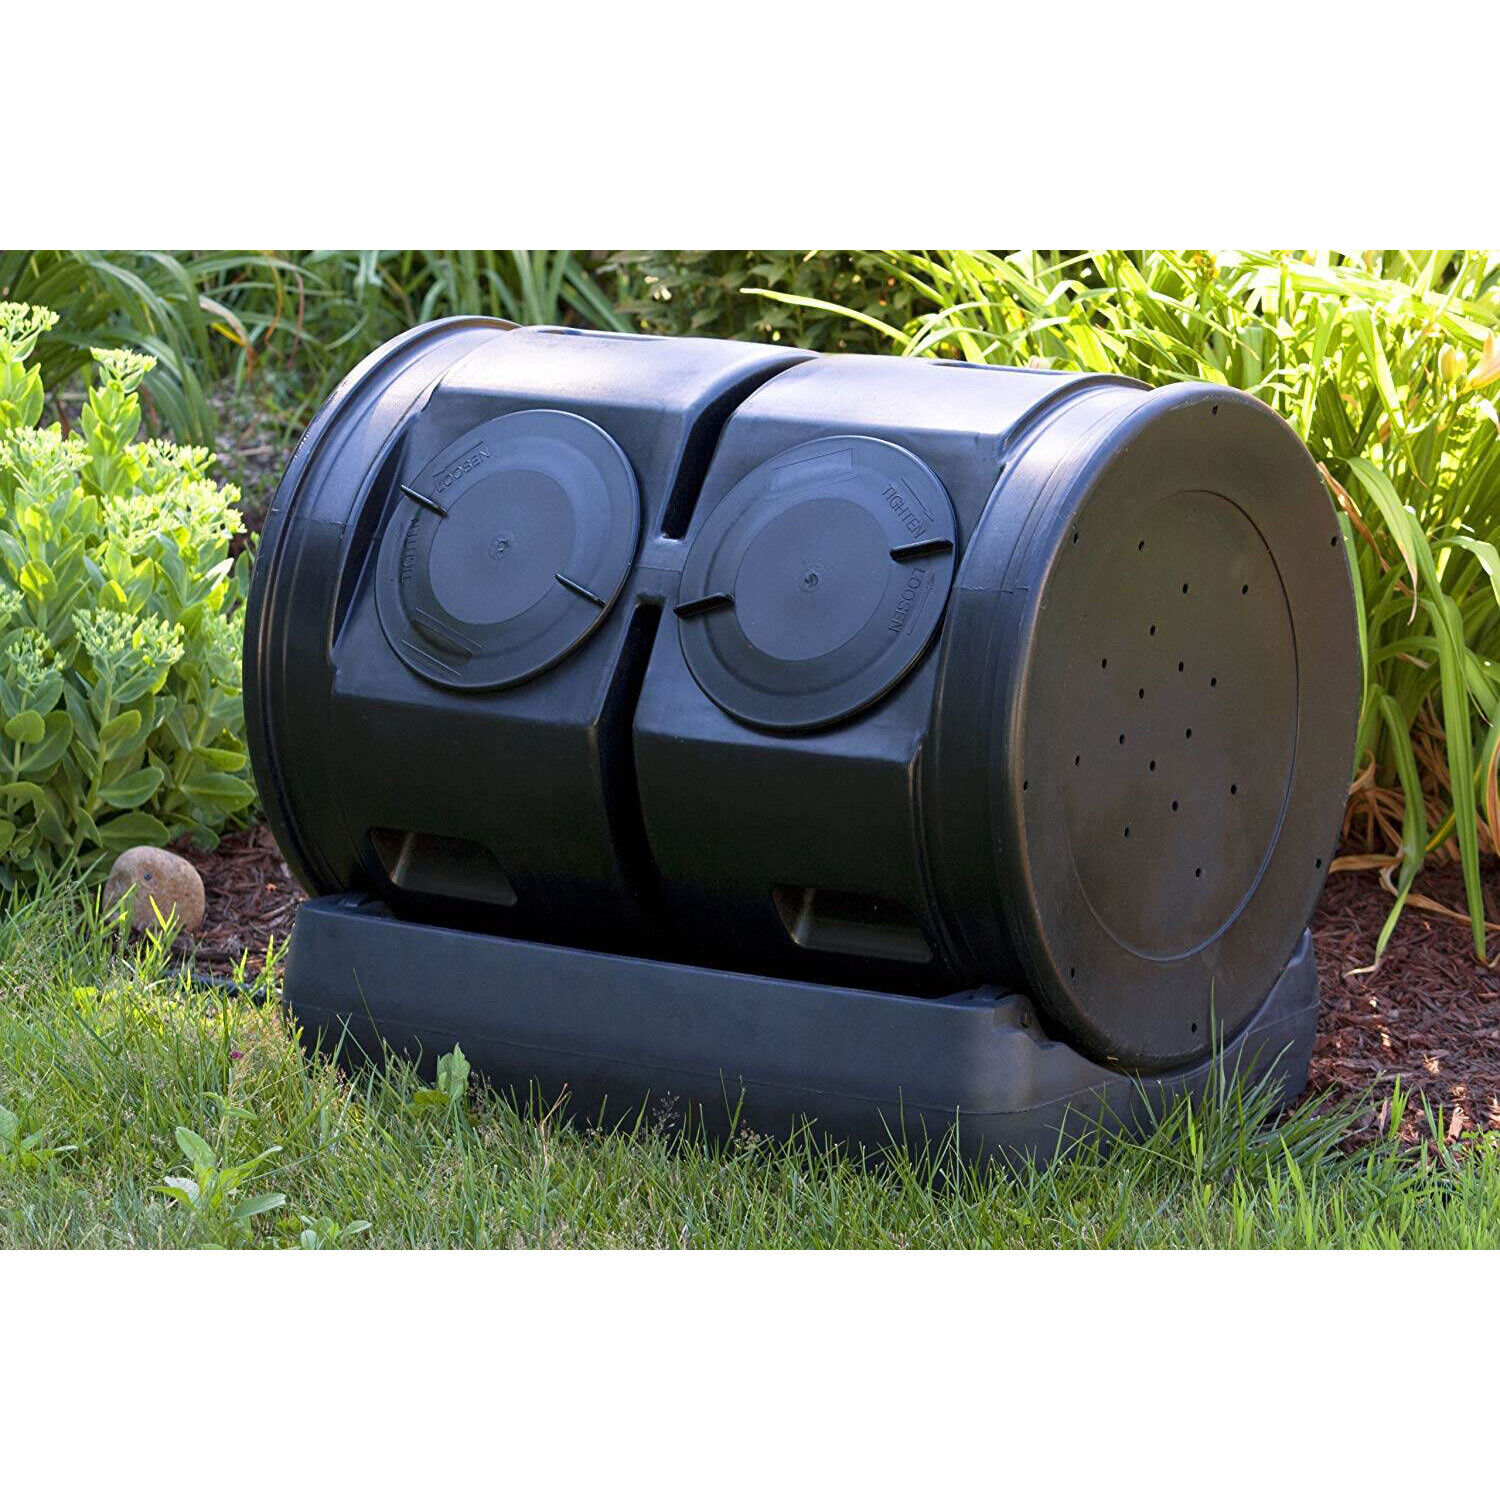 thinkstar Compost Wizard Outdoor Garden Dual Tumbler Compost Container Black